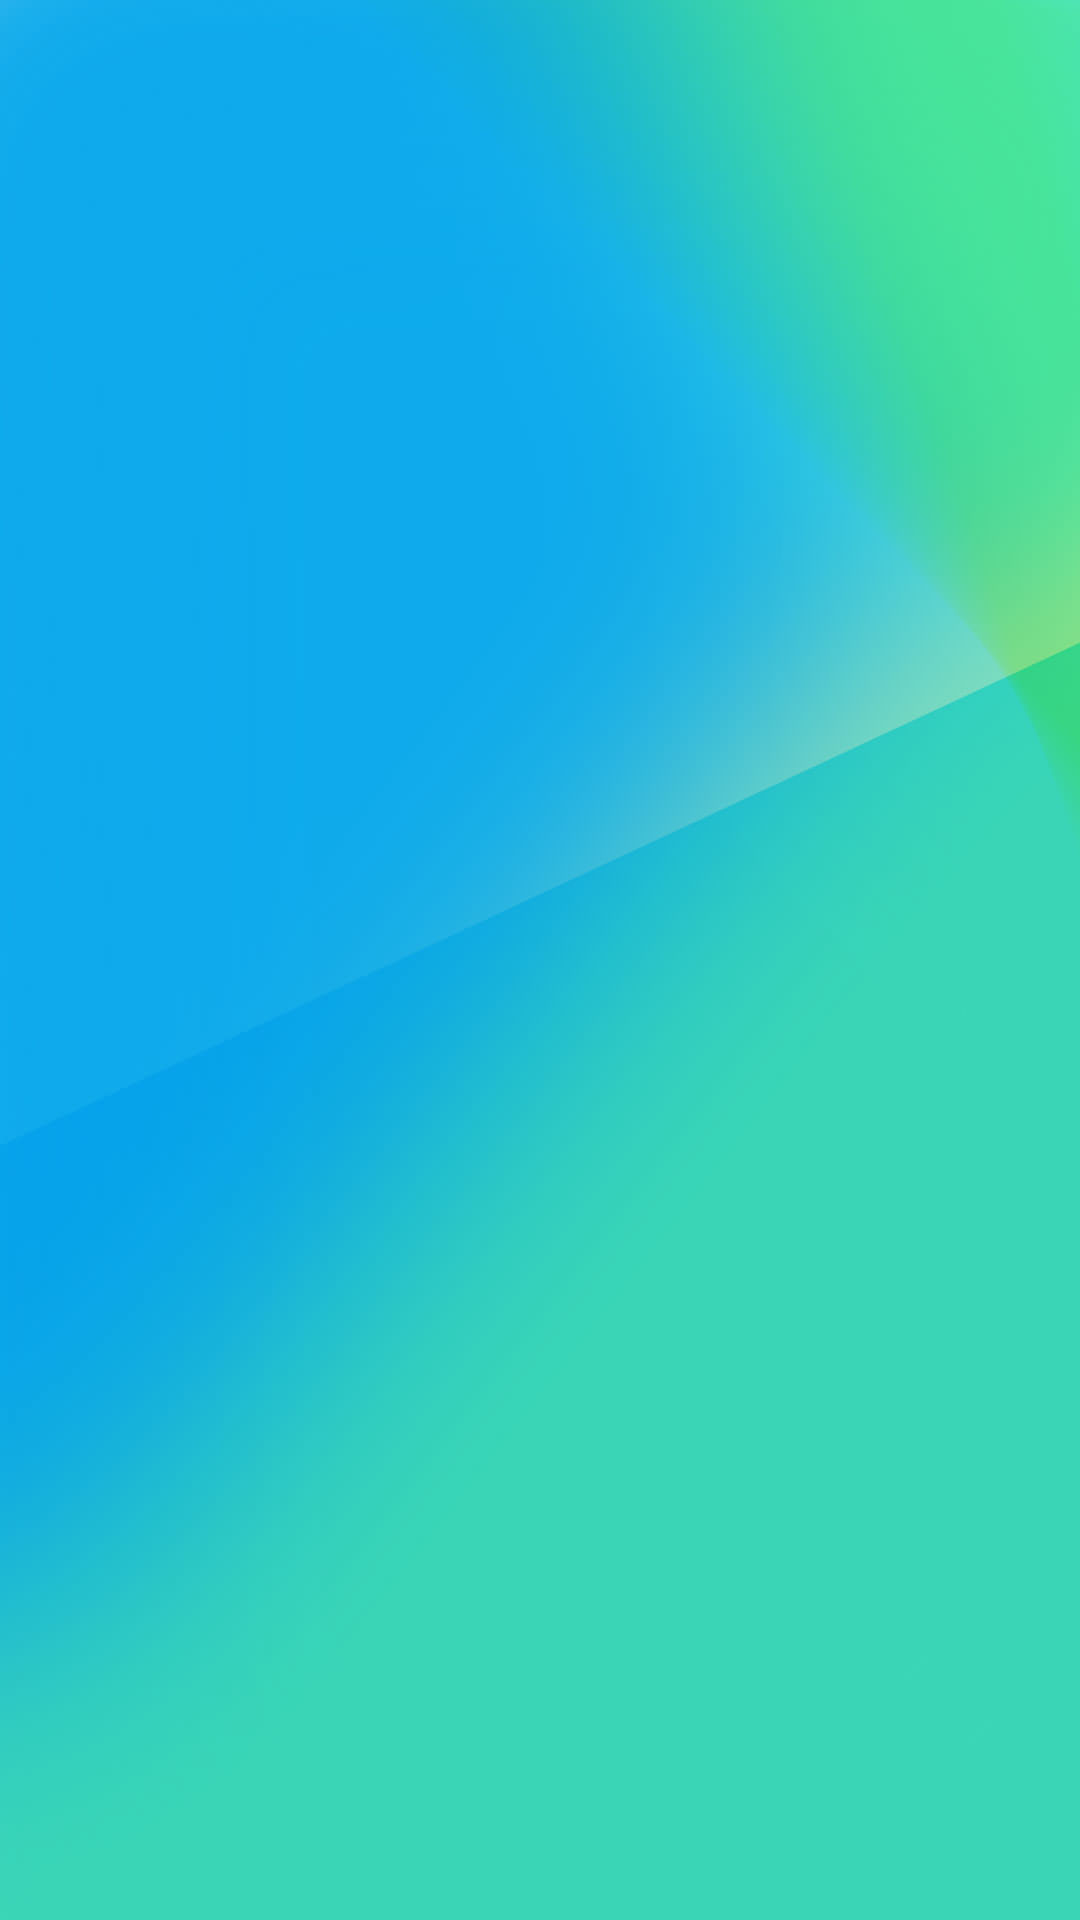 android stock wallpaper,grün,blau,aqua,tagsüber,türkis